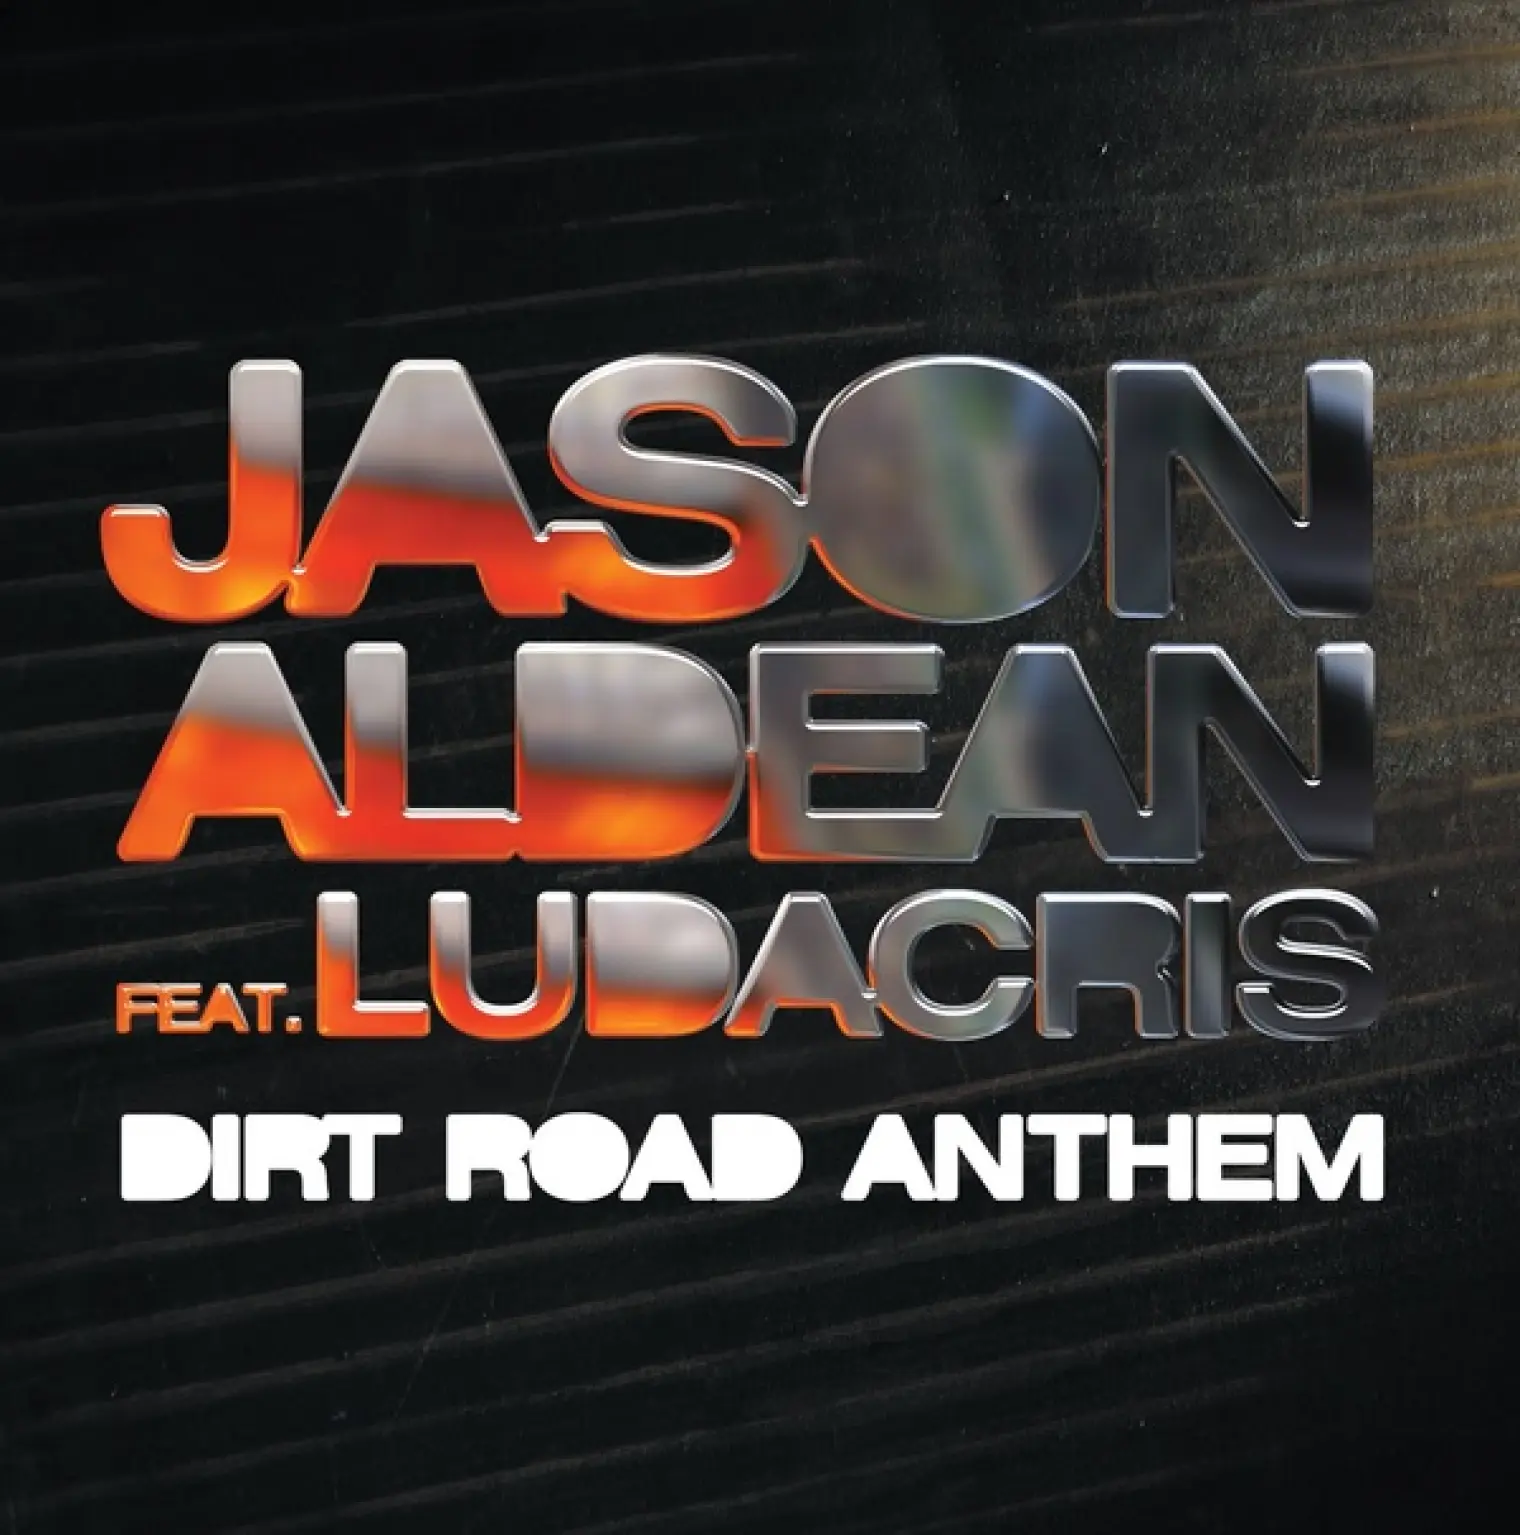 Dirt Road Anthem (Remix) [feat. Ludacris] -  Jason Aldean 